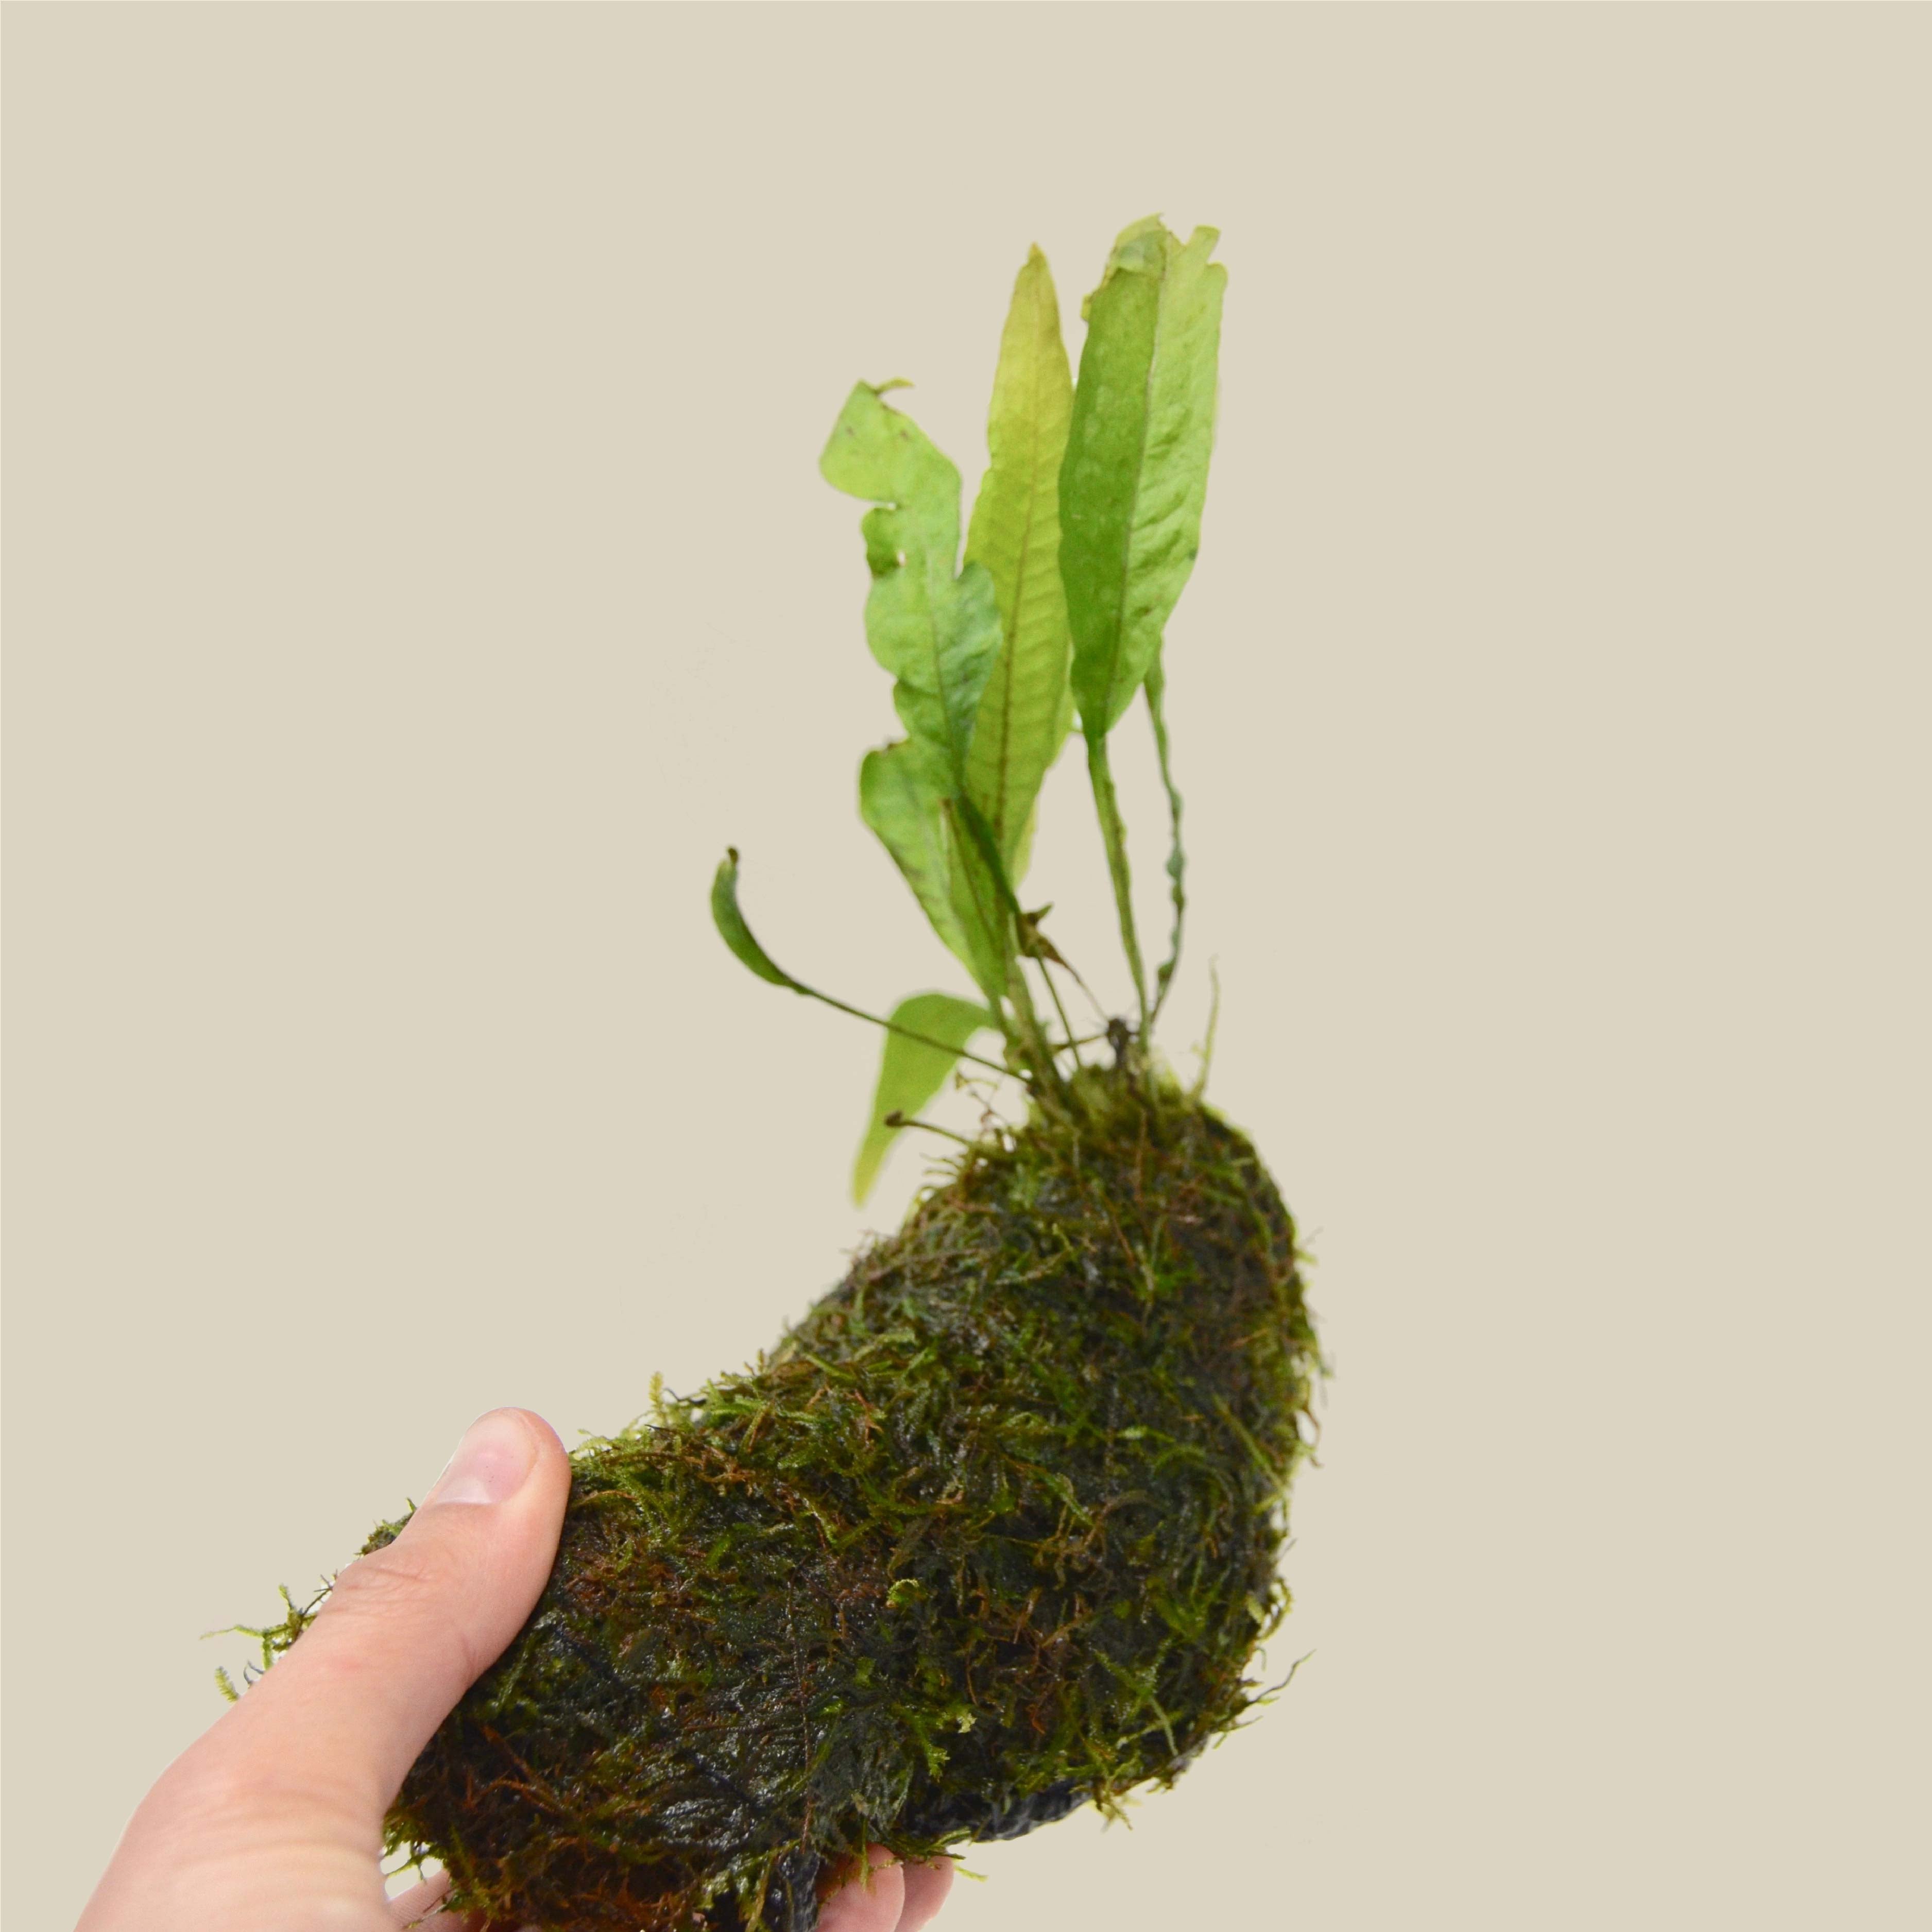 Aquatic Java Fern and Java Moss on Wood - Live Plants, Indoor Plant, Tropical Plant